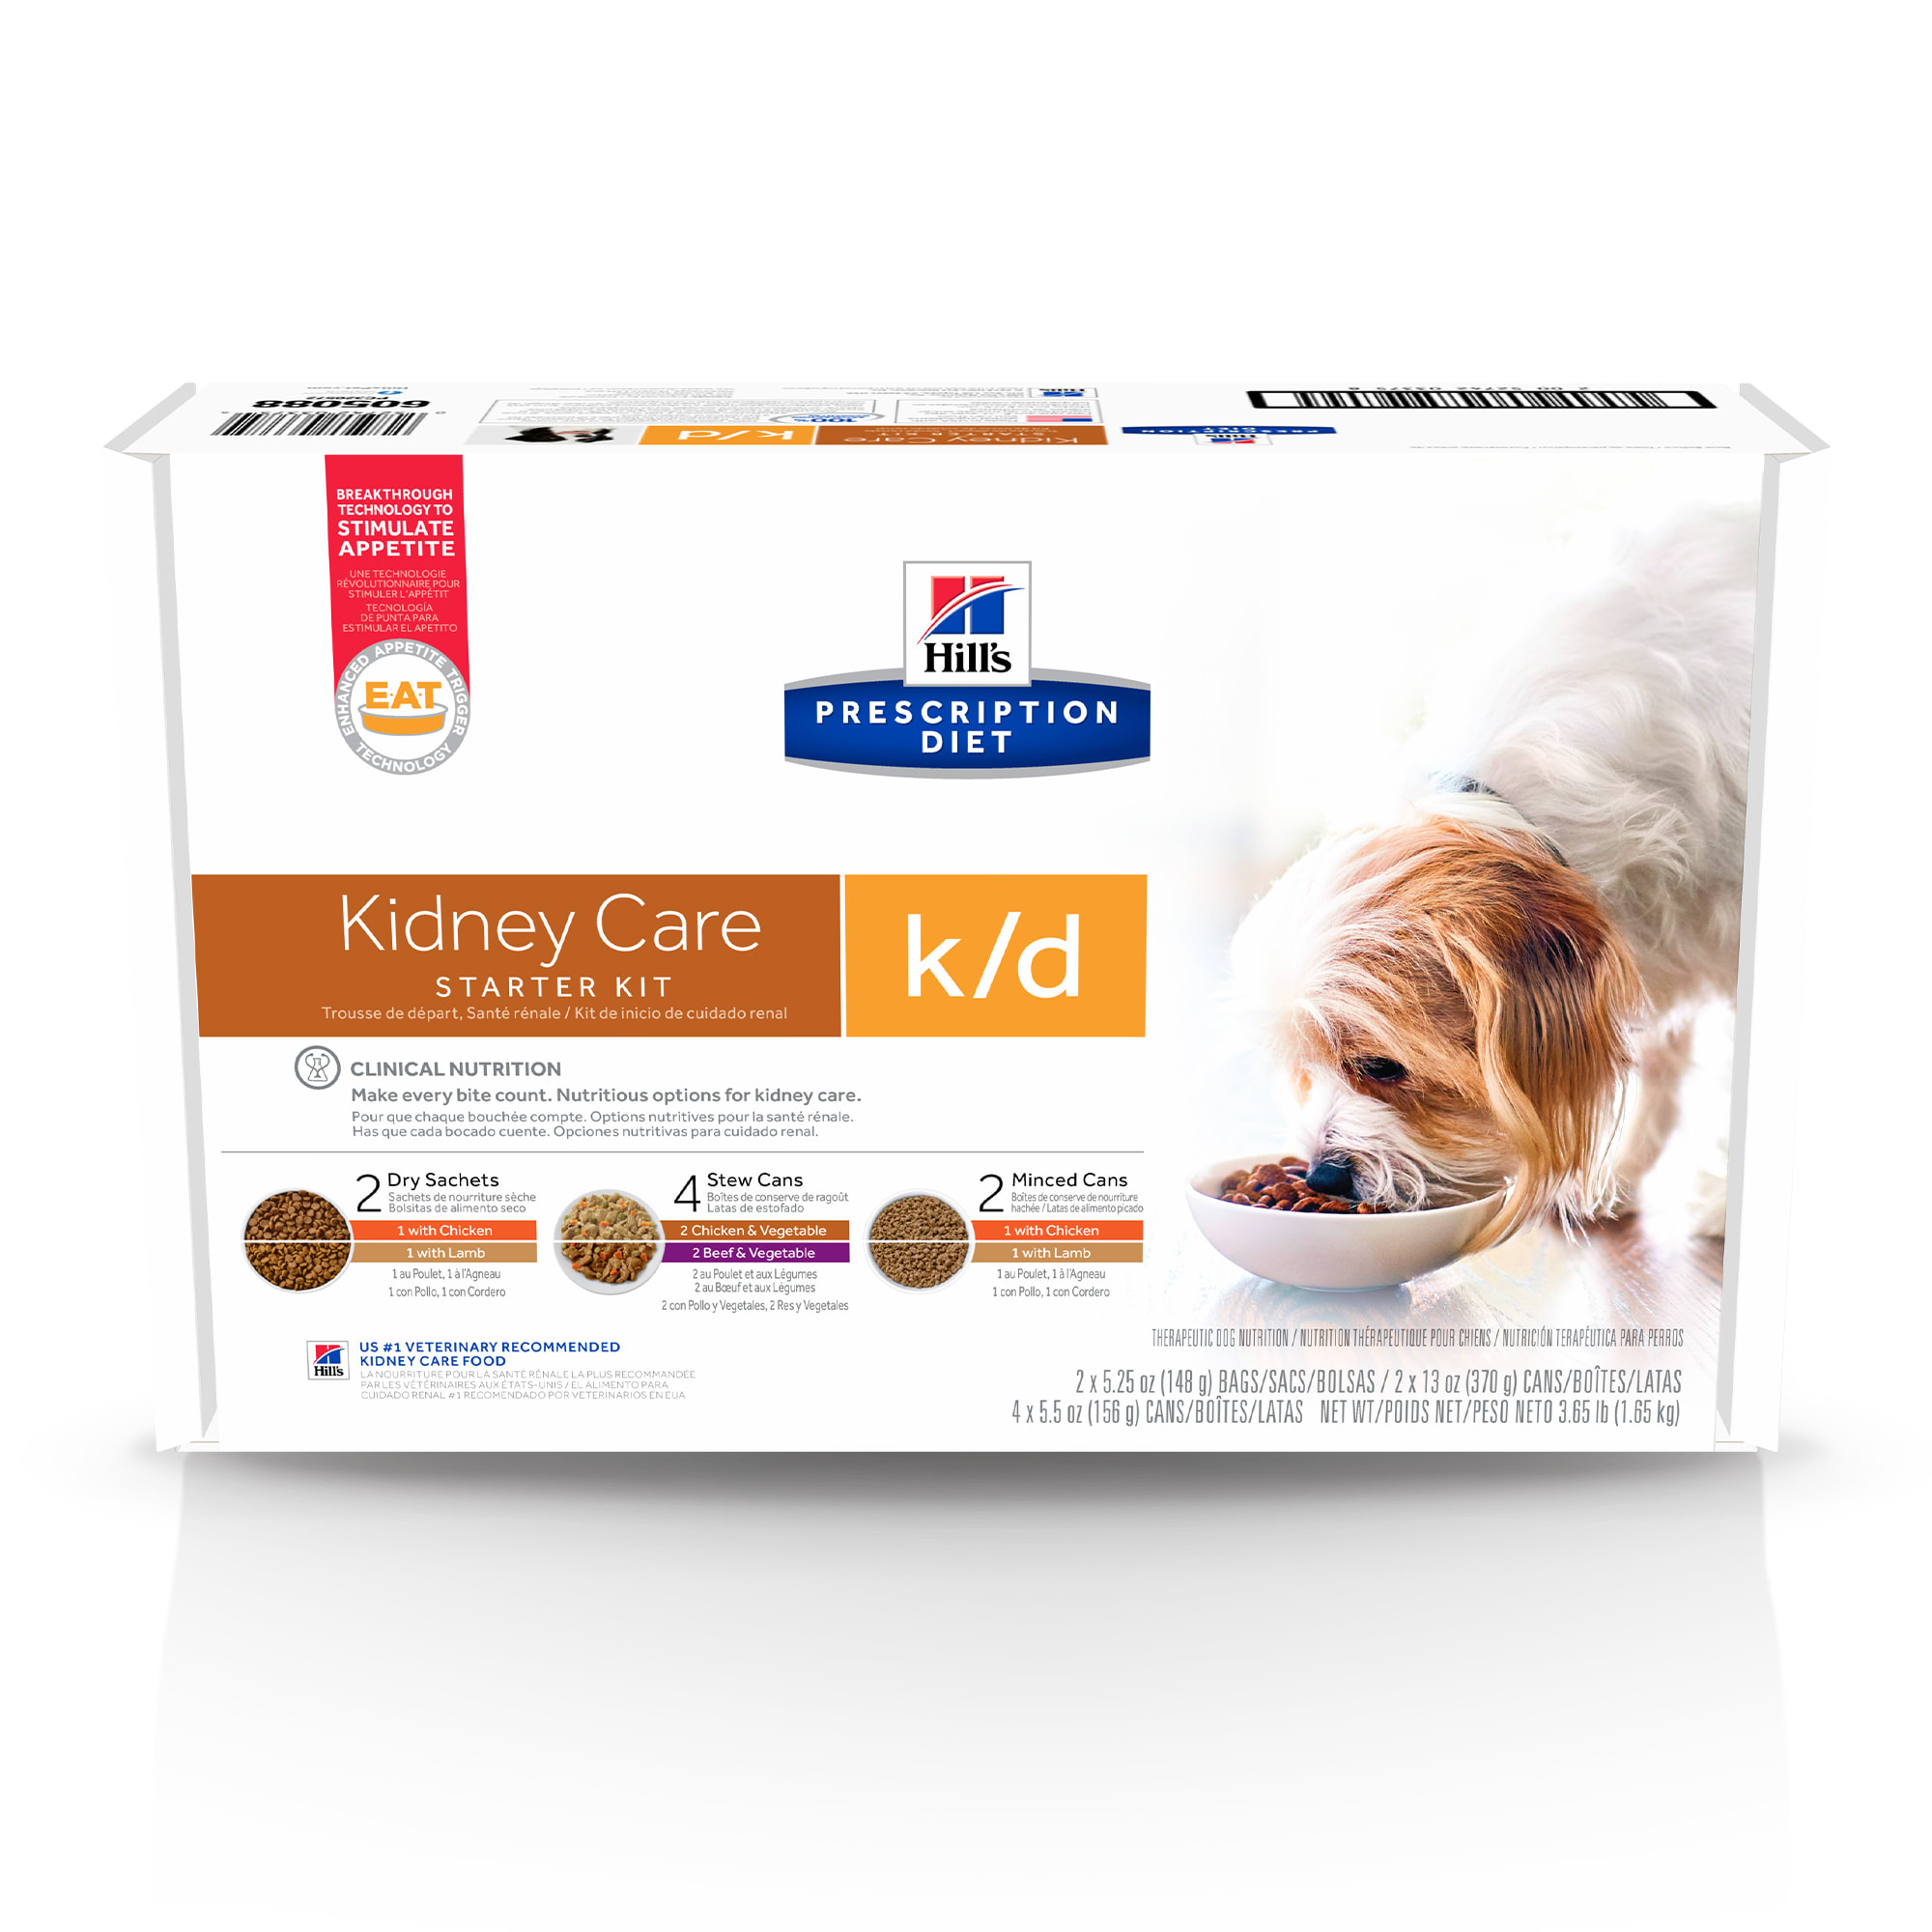 Vereniging Adverteerder voor de hand liggend Hill's Prescription Diet k/d Kidney Care Starter Kit Variety Pack Dry Dog  Food, 3.66 lbs., Count of 8 | Petco